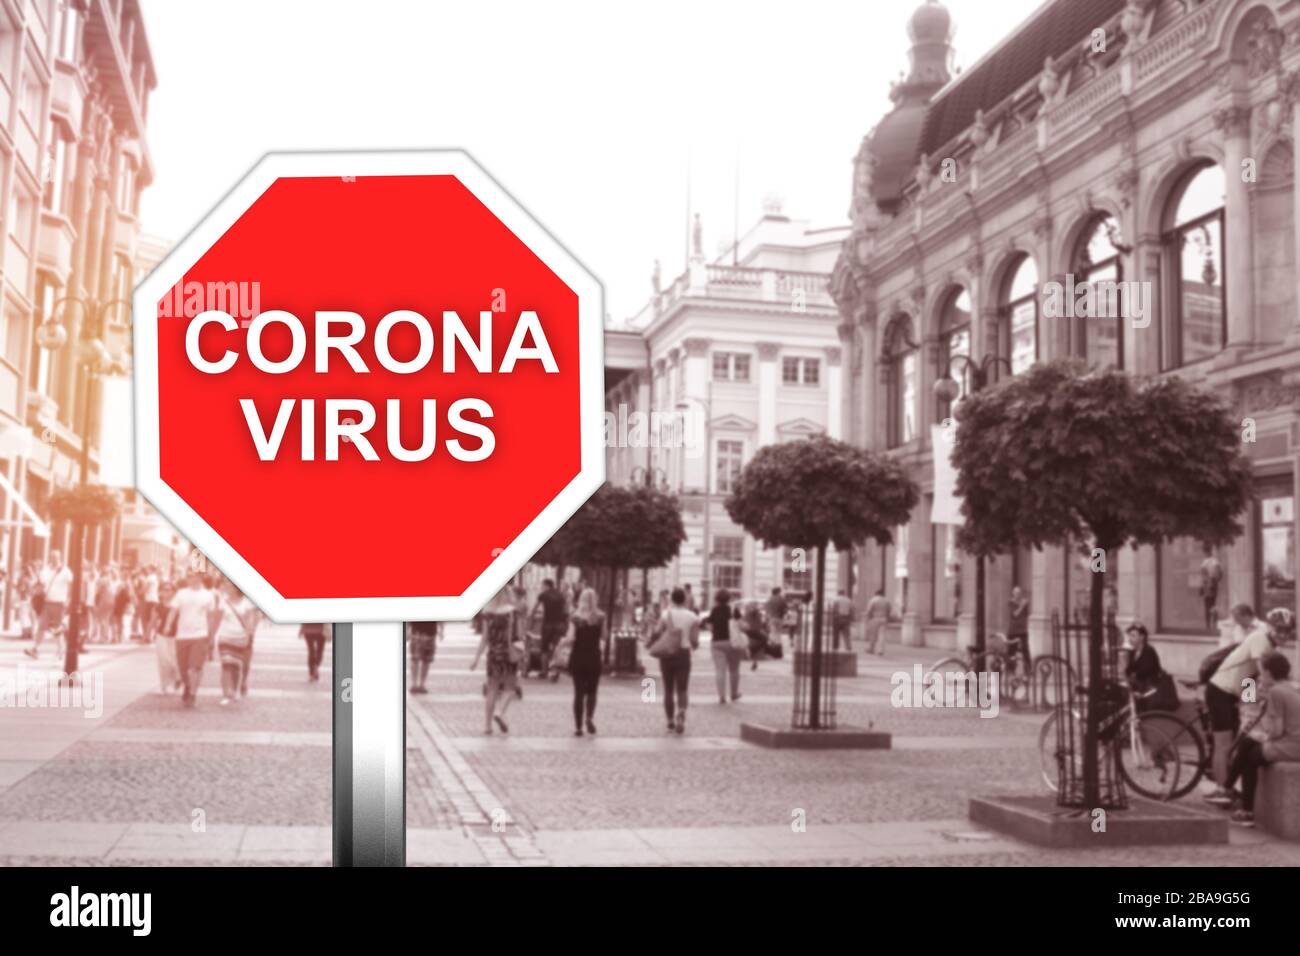 Corona virus warning sign in the in city Stock Photo